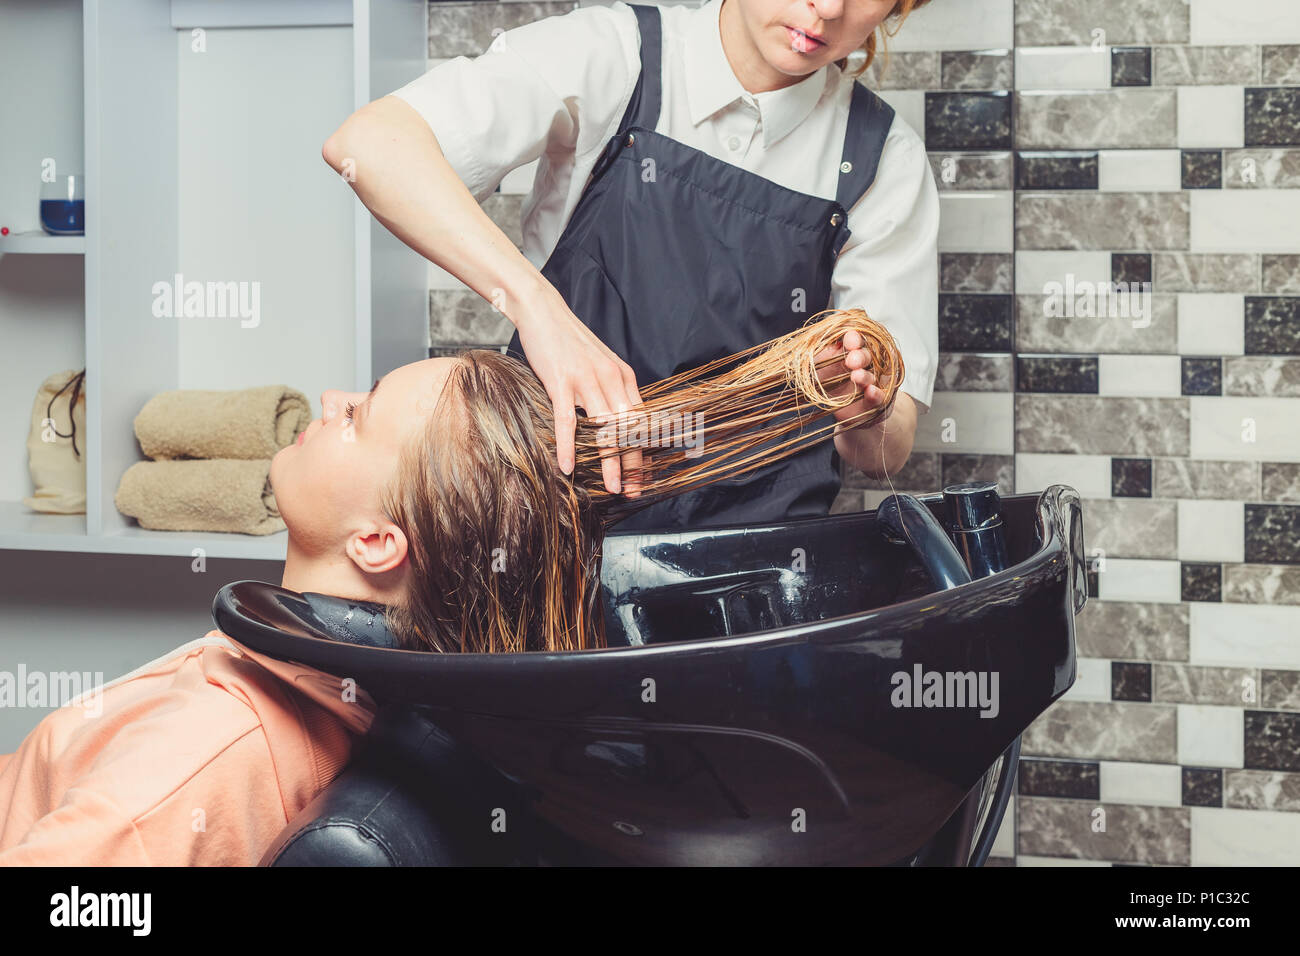 Hair Wash Procedure In A Beauty Salon A Hair Dresser Is Washing